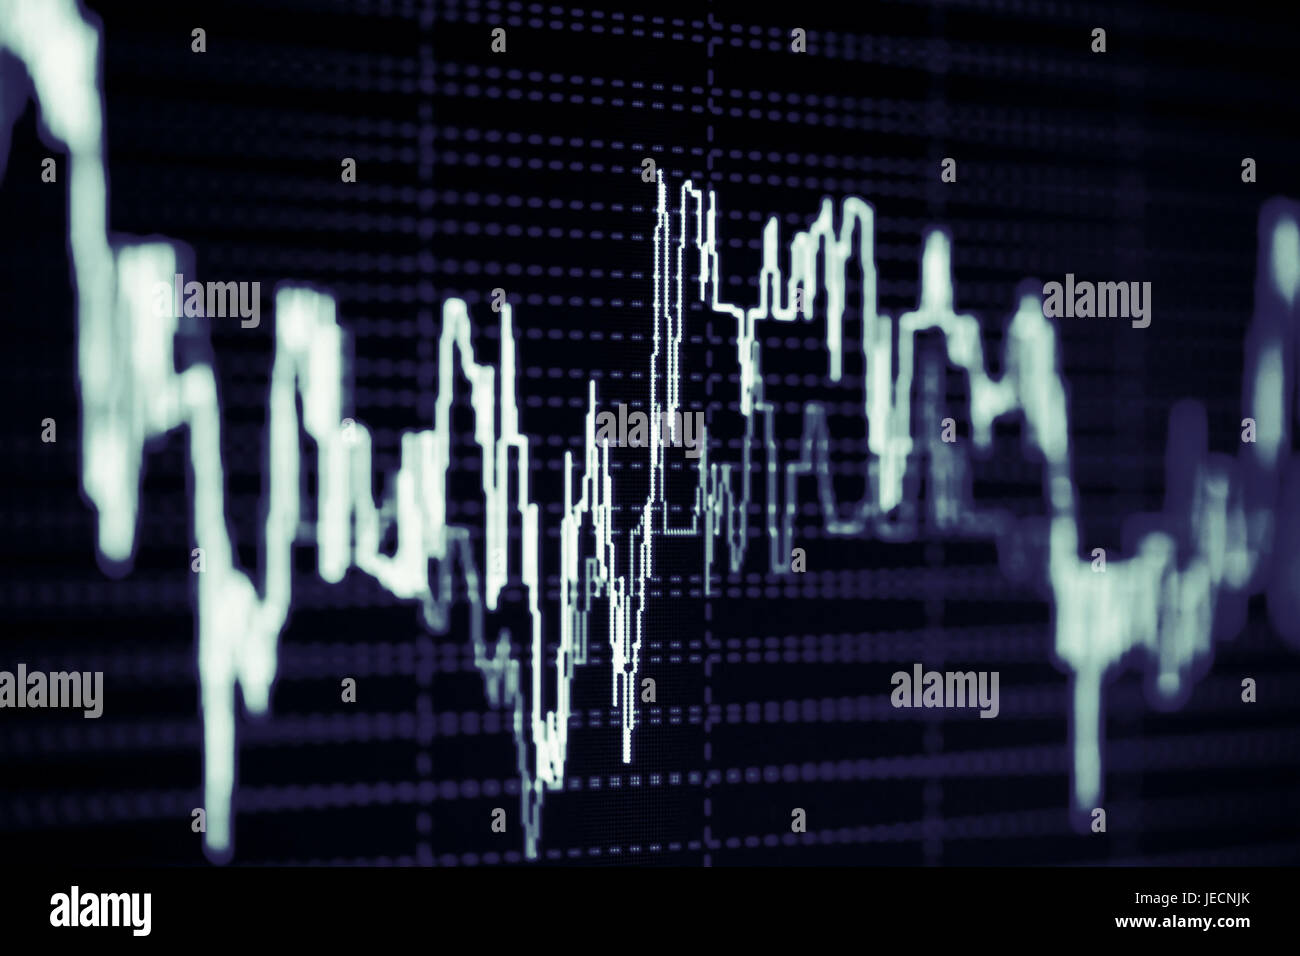 Stock market graphs on computer screen Stock Photo